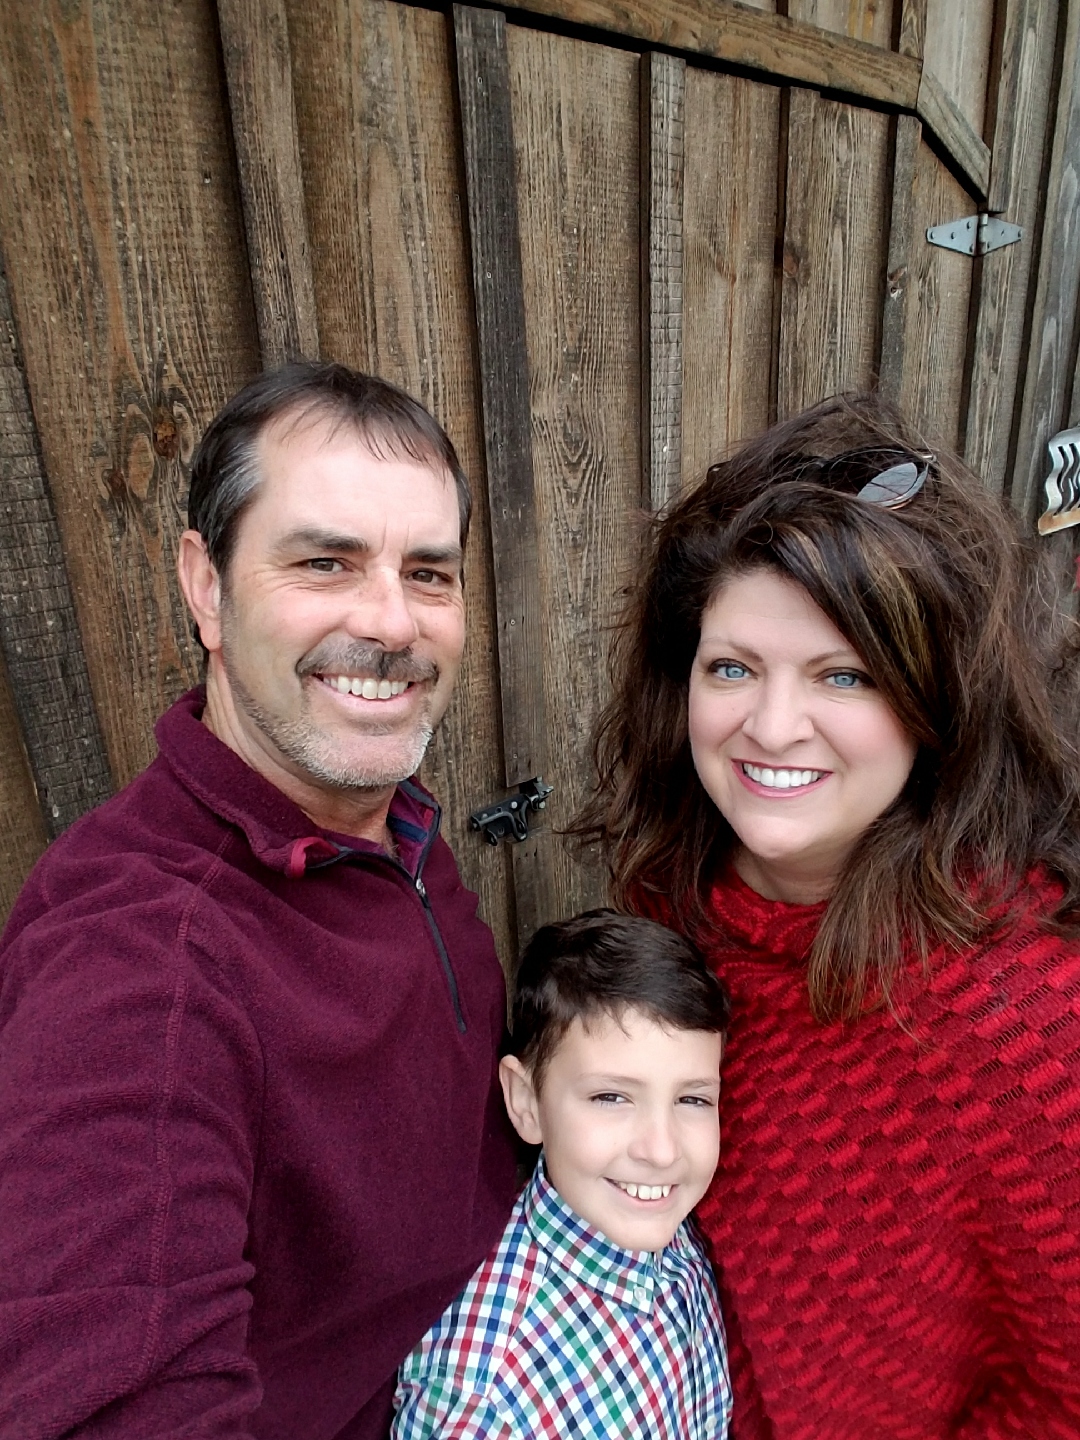 Opelika family shares story of how faith, love helped beat battle with brain cancer